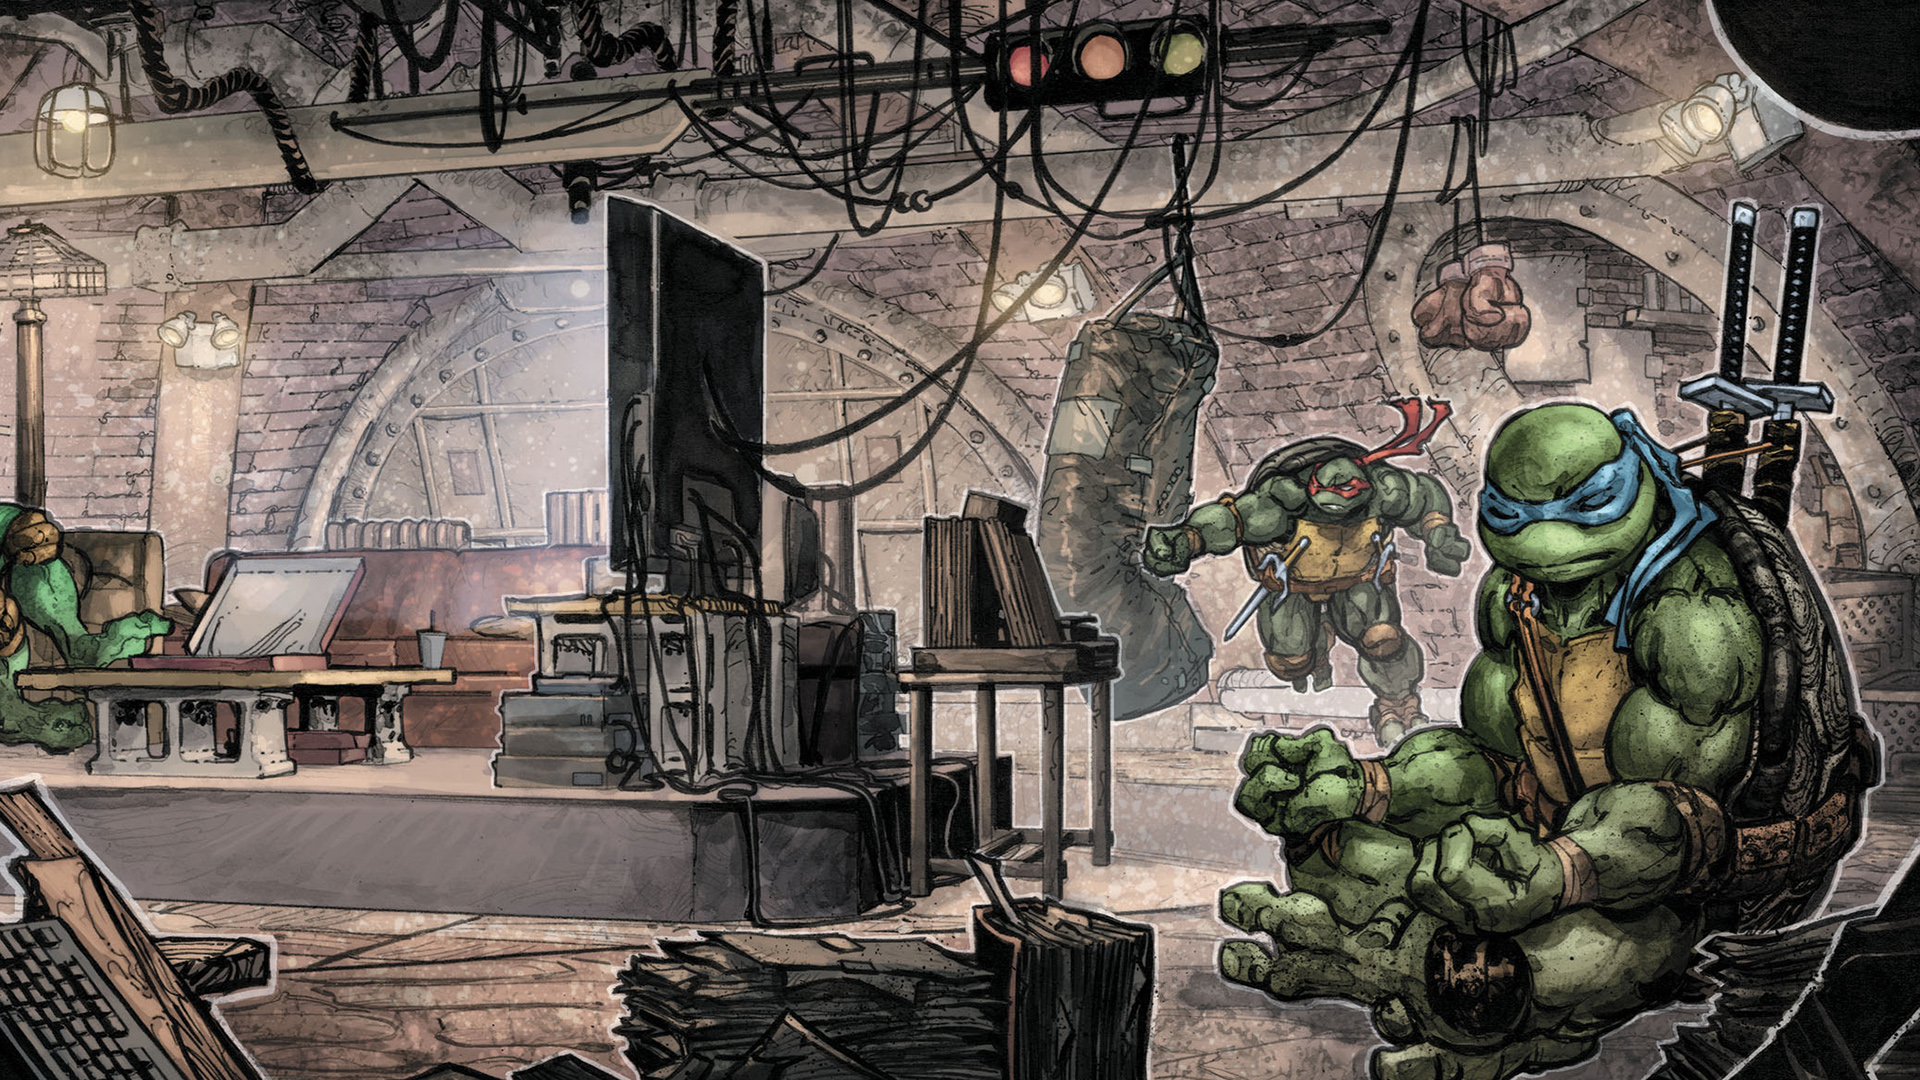 876969 Bild herunterladen comics, teenage mutant hero turtles, leonardo (tmnt), meditation, raffael (tmnt), teenage mutant ninja turtles - Hintergrundbilder und Bildschirmschoner kostenlos